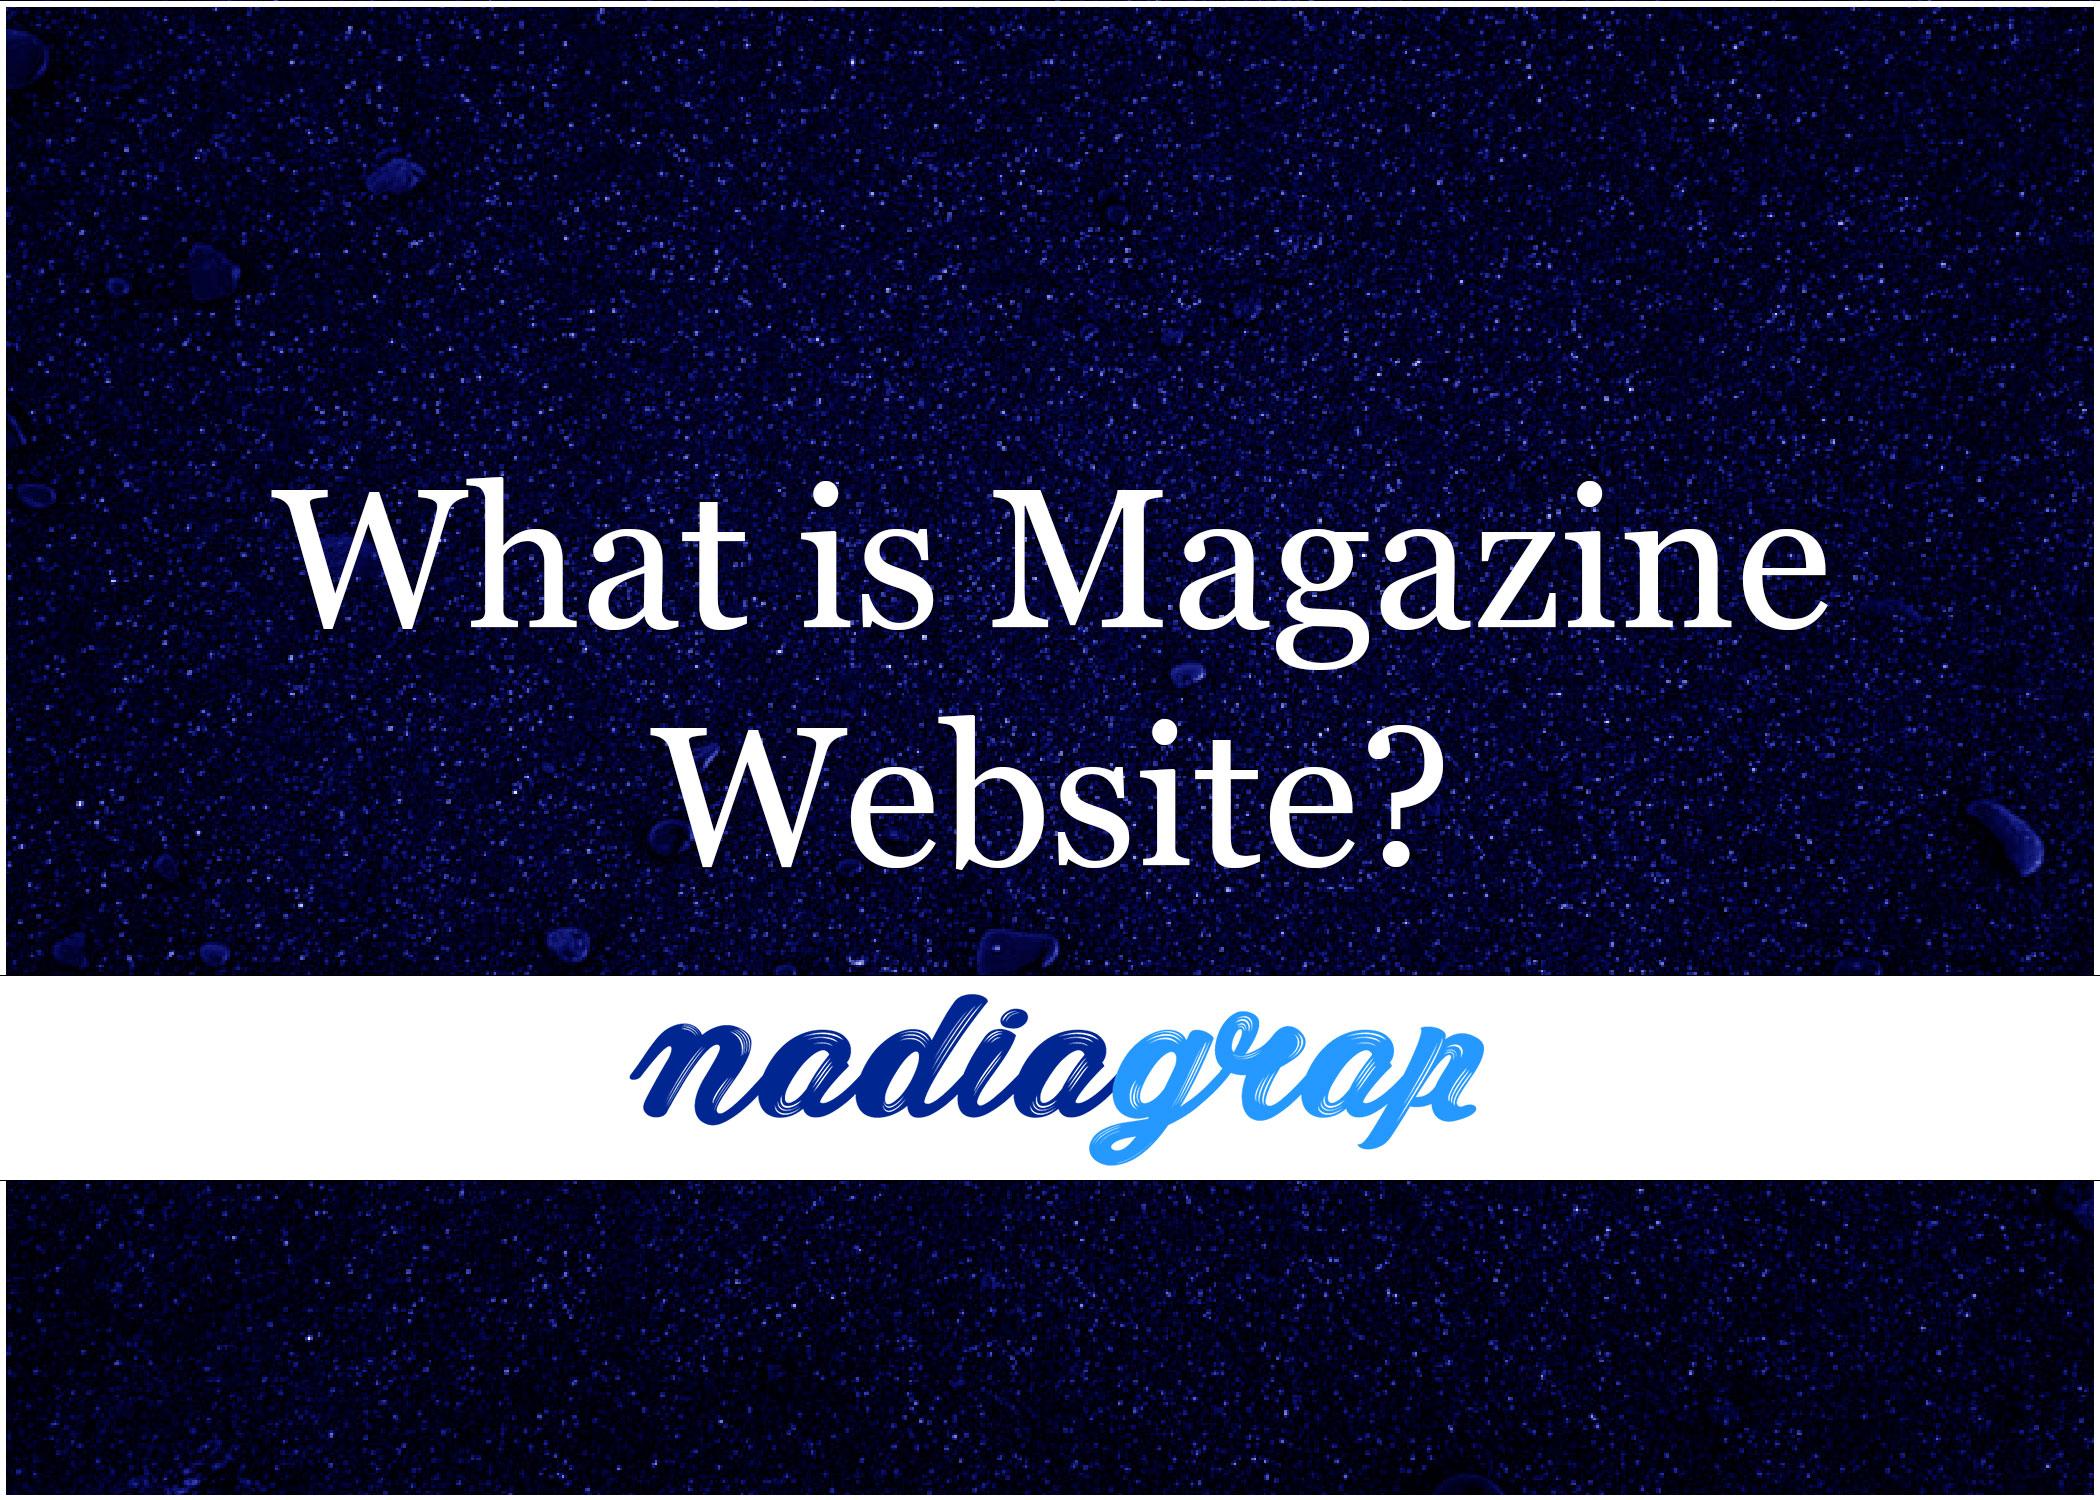 Magazine websites